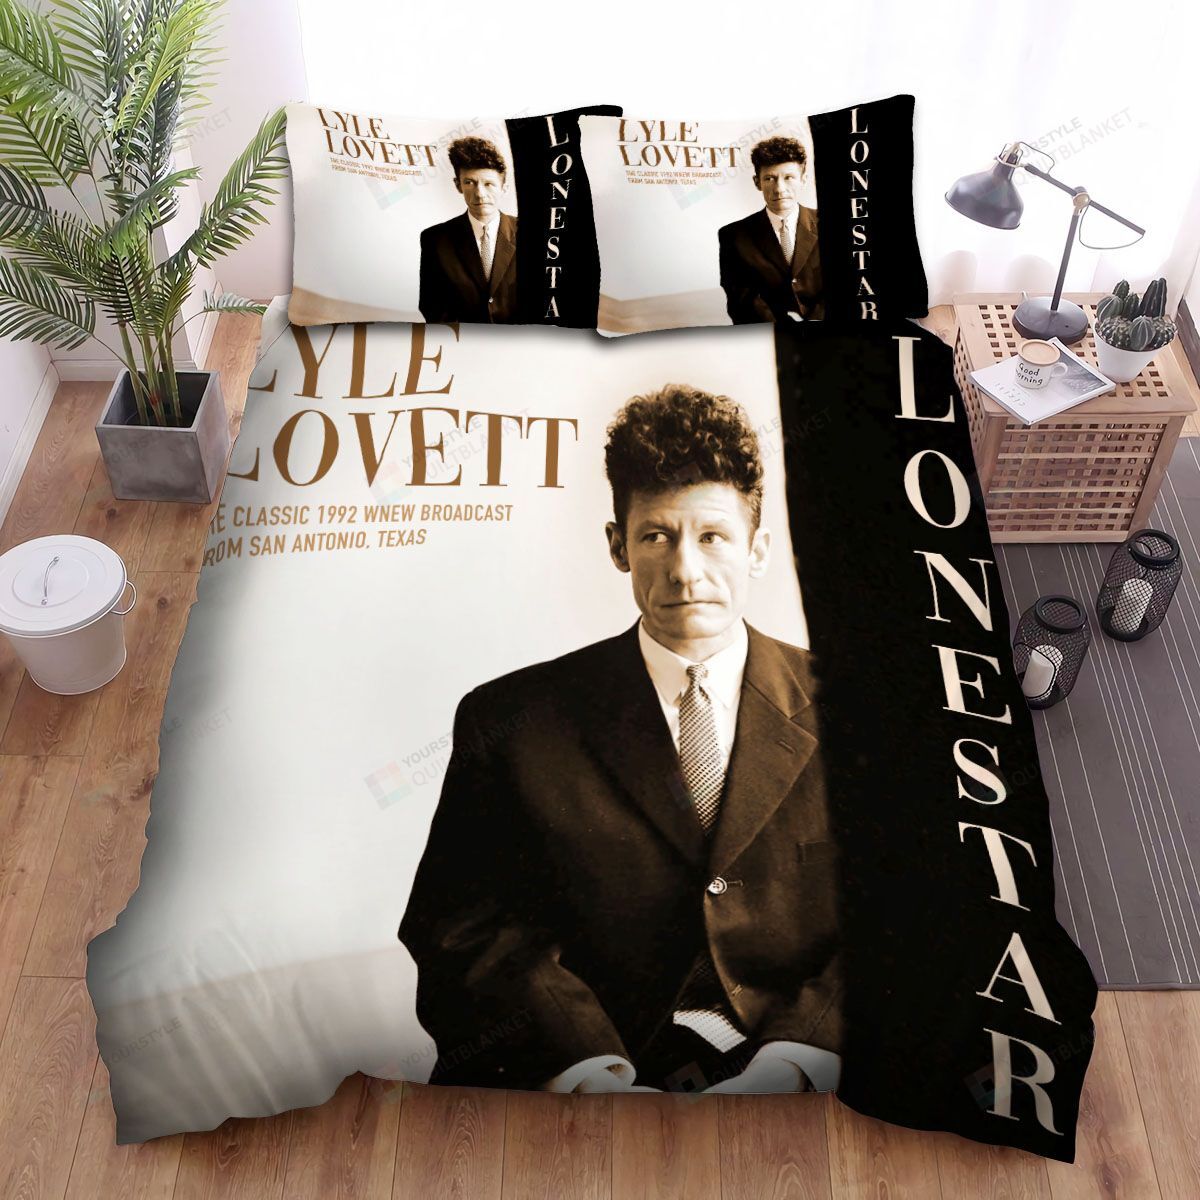 Lyle Lovett Lonestar Bed Sheets Spread Comforter Duvet Cover Bedding Sets